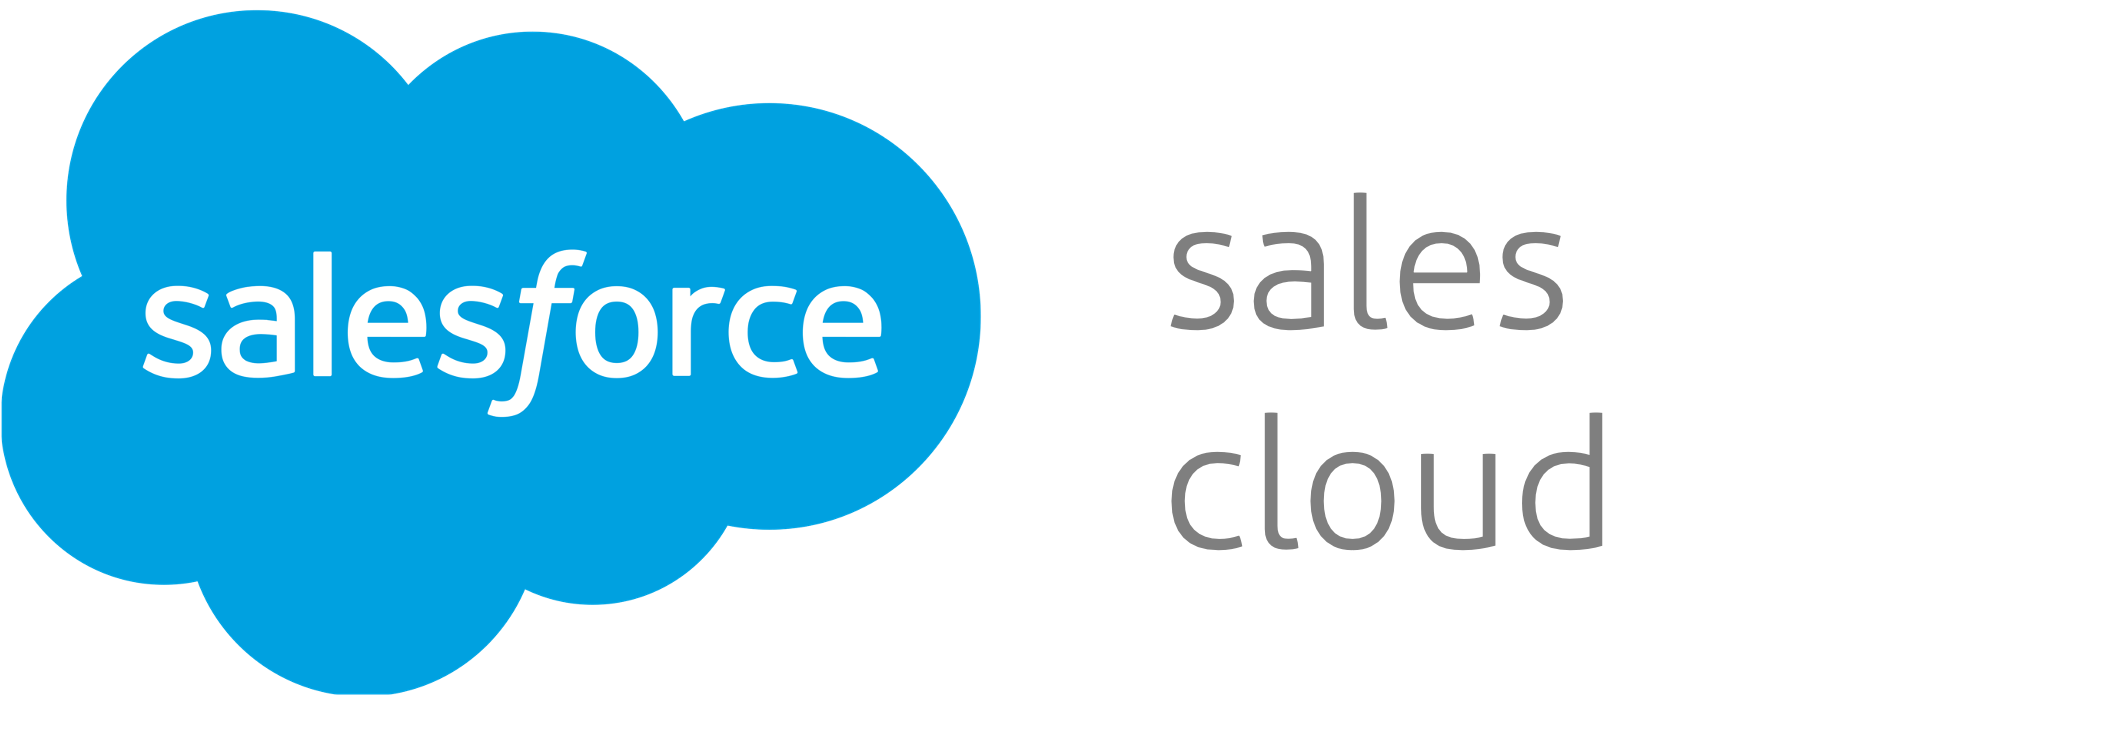 Salesforce Sales Cloud Logo